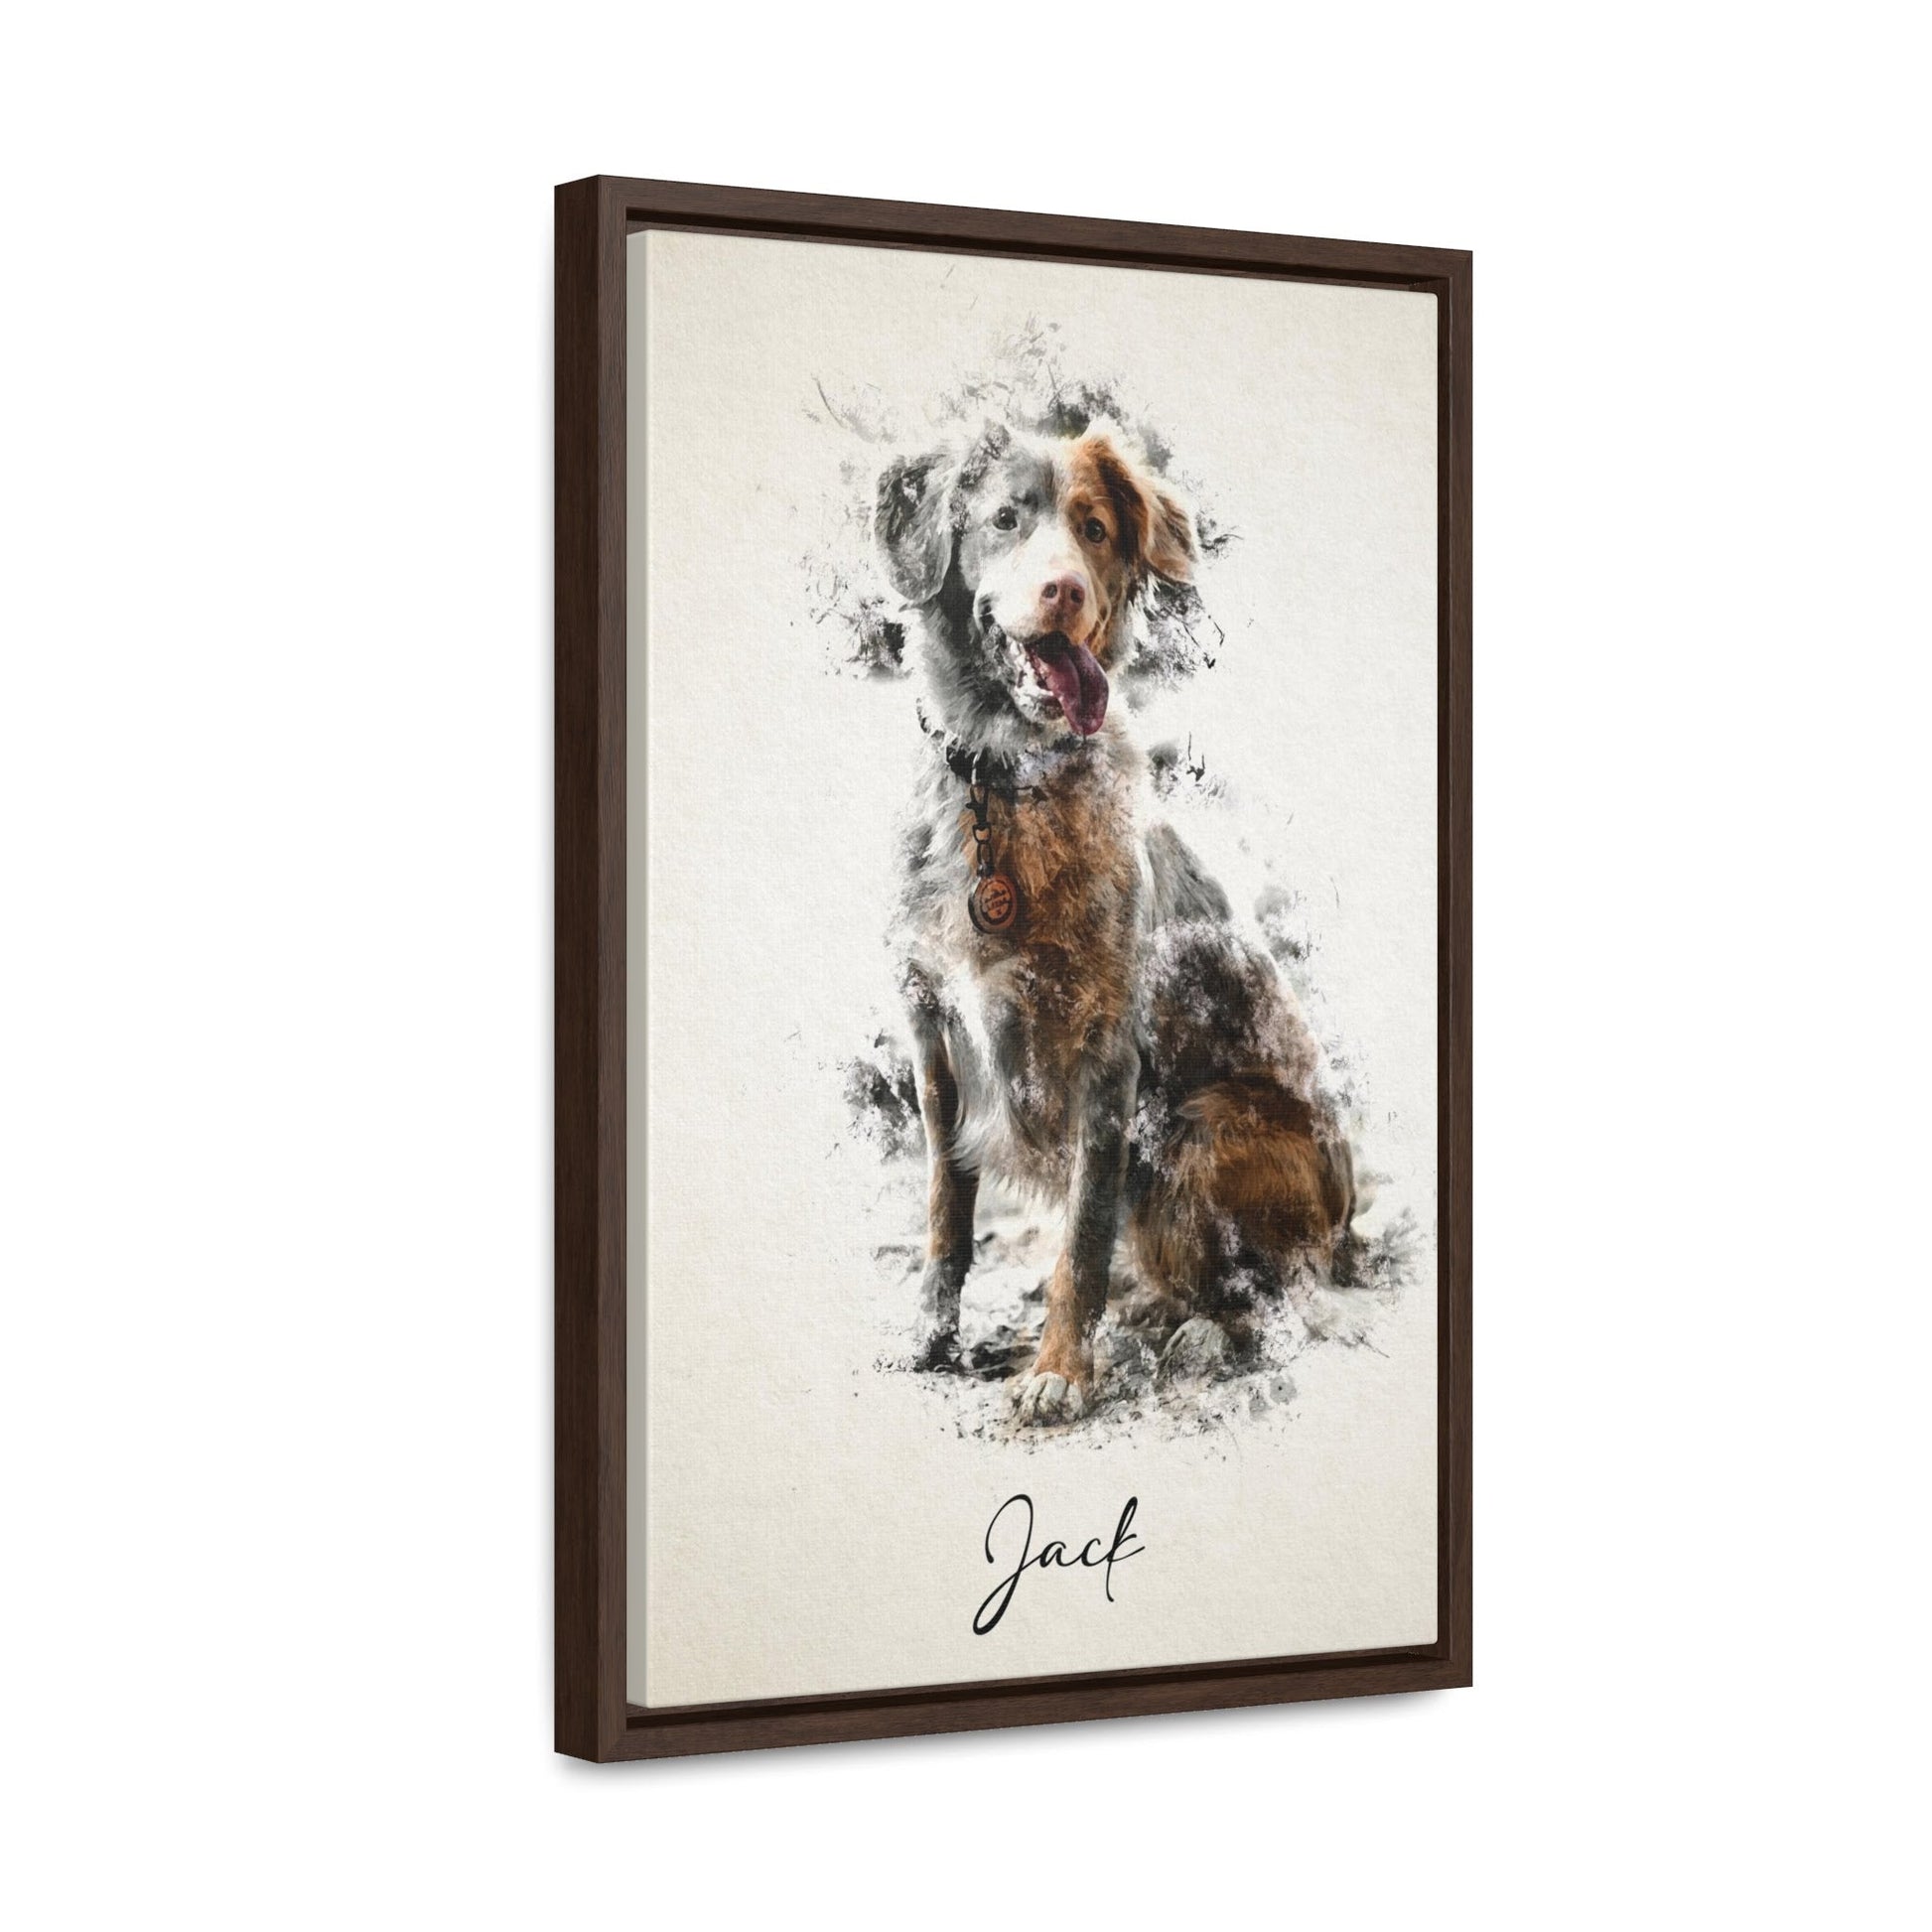 Custom pet portrait in elegant frame, a cherished personalized keepsake-dog portrait